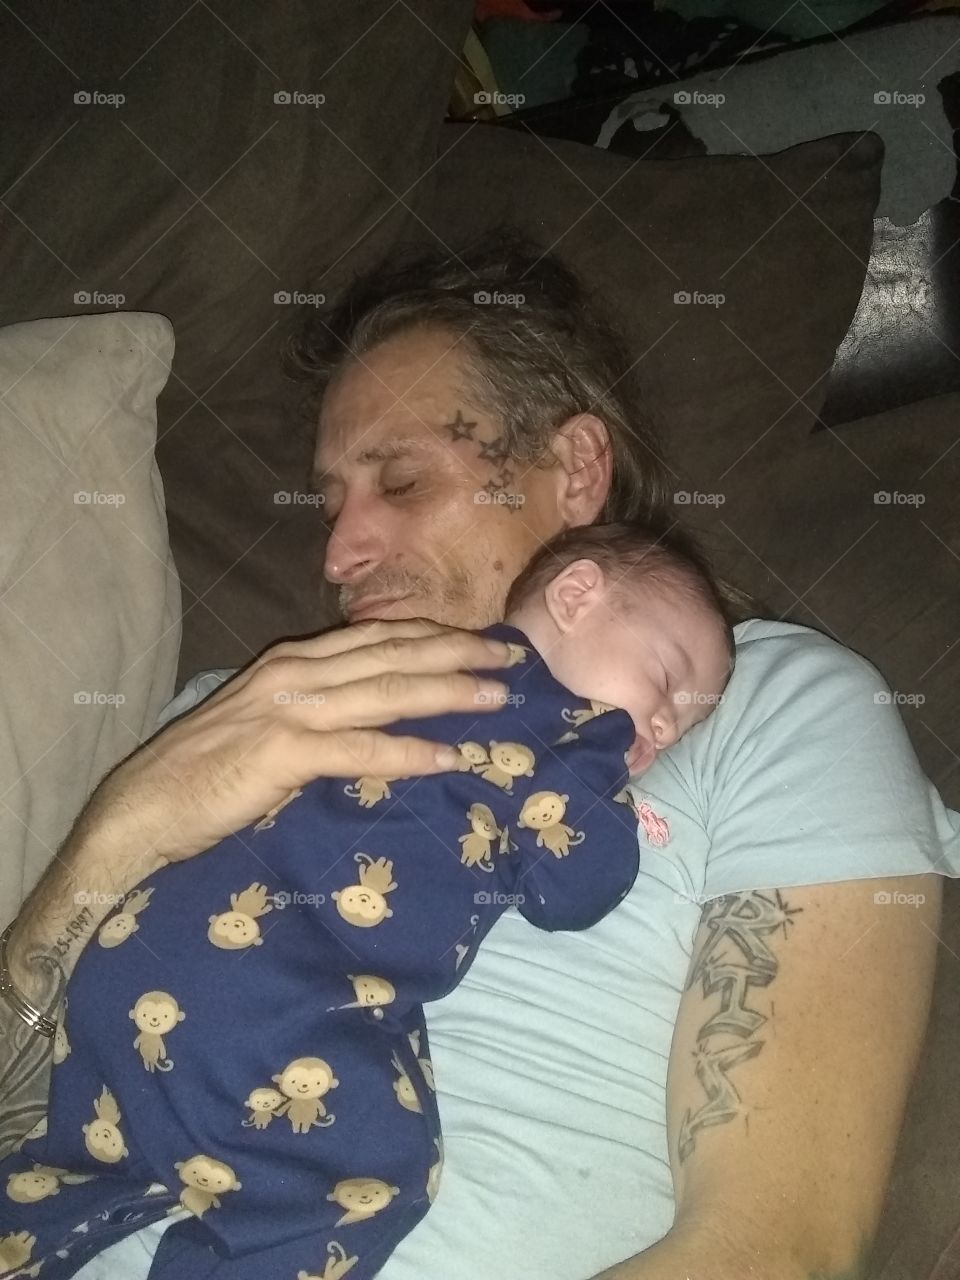 dad cuddle time